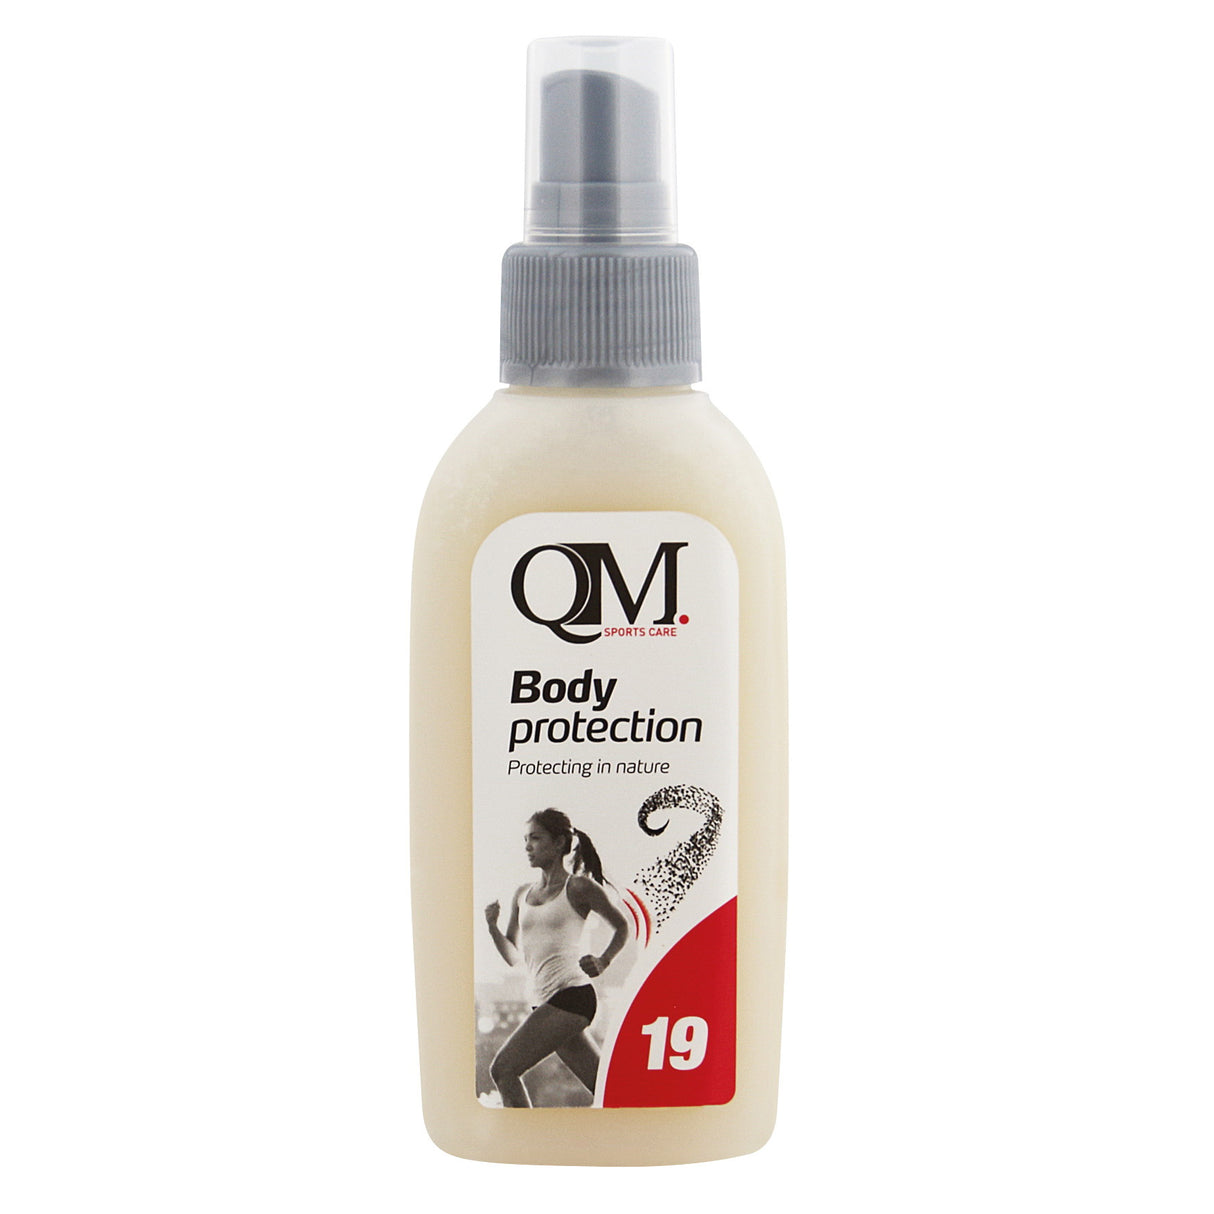 Qm QM Sportscare 19 spray Body Protection 250ml